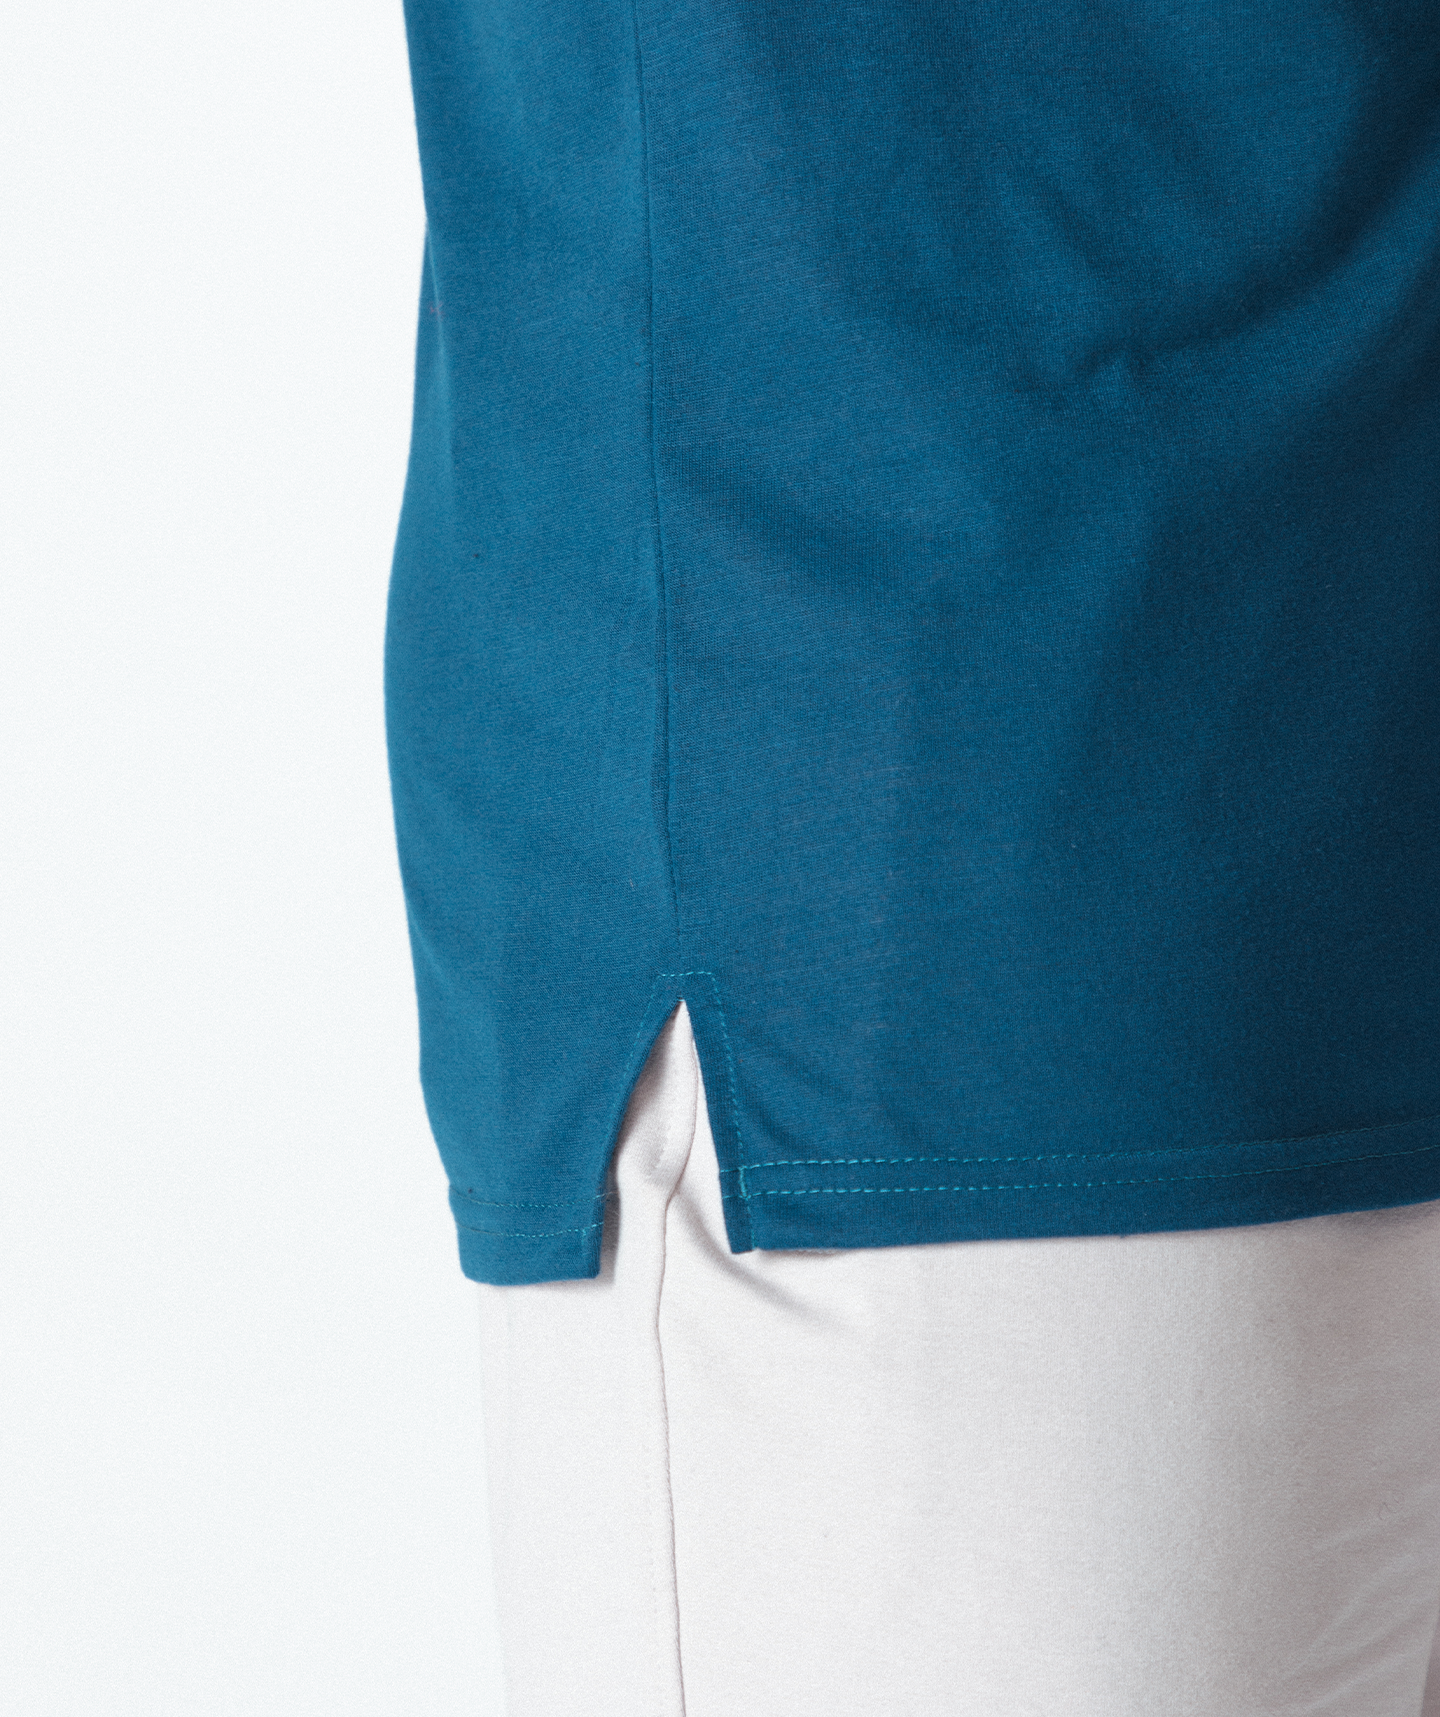 Kg ⚜  
10970-05 ⚜  
B5 ⚜  
PANTONE: Petroli-Blue ⚜  
single jersey, 100 % spun polyester, 165 gsm, 150 cm, P:Petroli-Blue